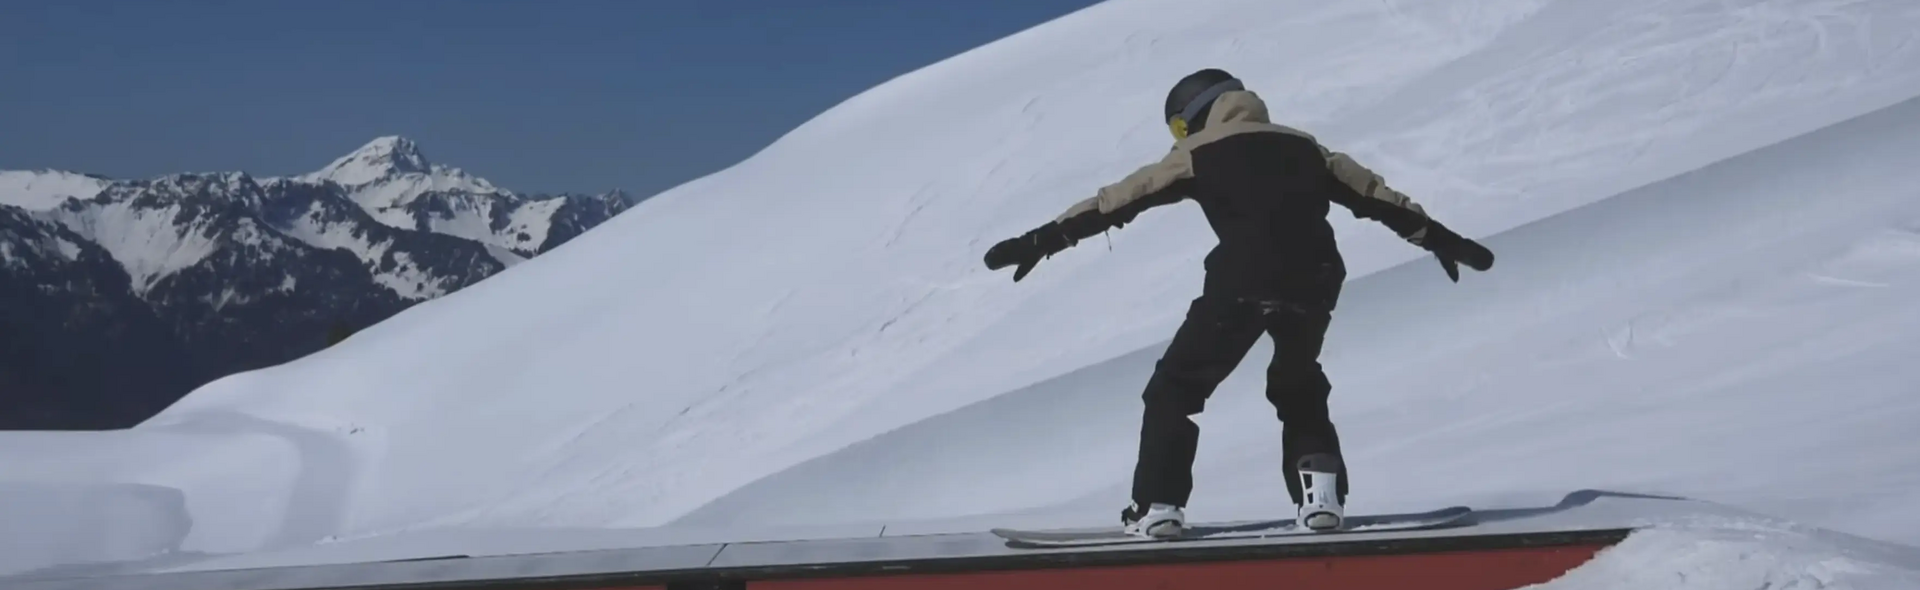 How do you do a 50-50 on a snowboard?